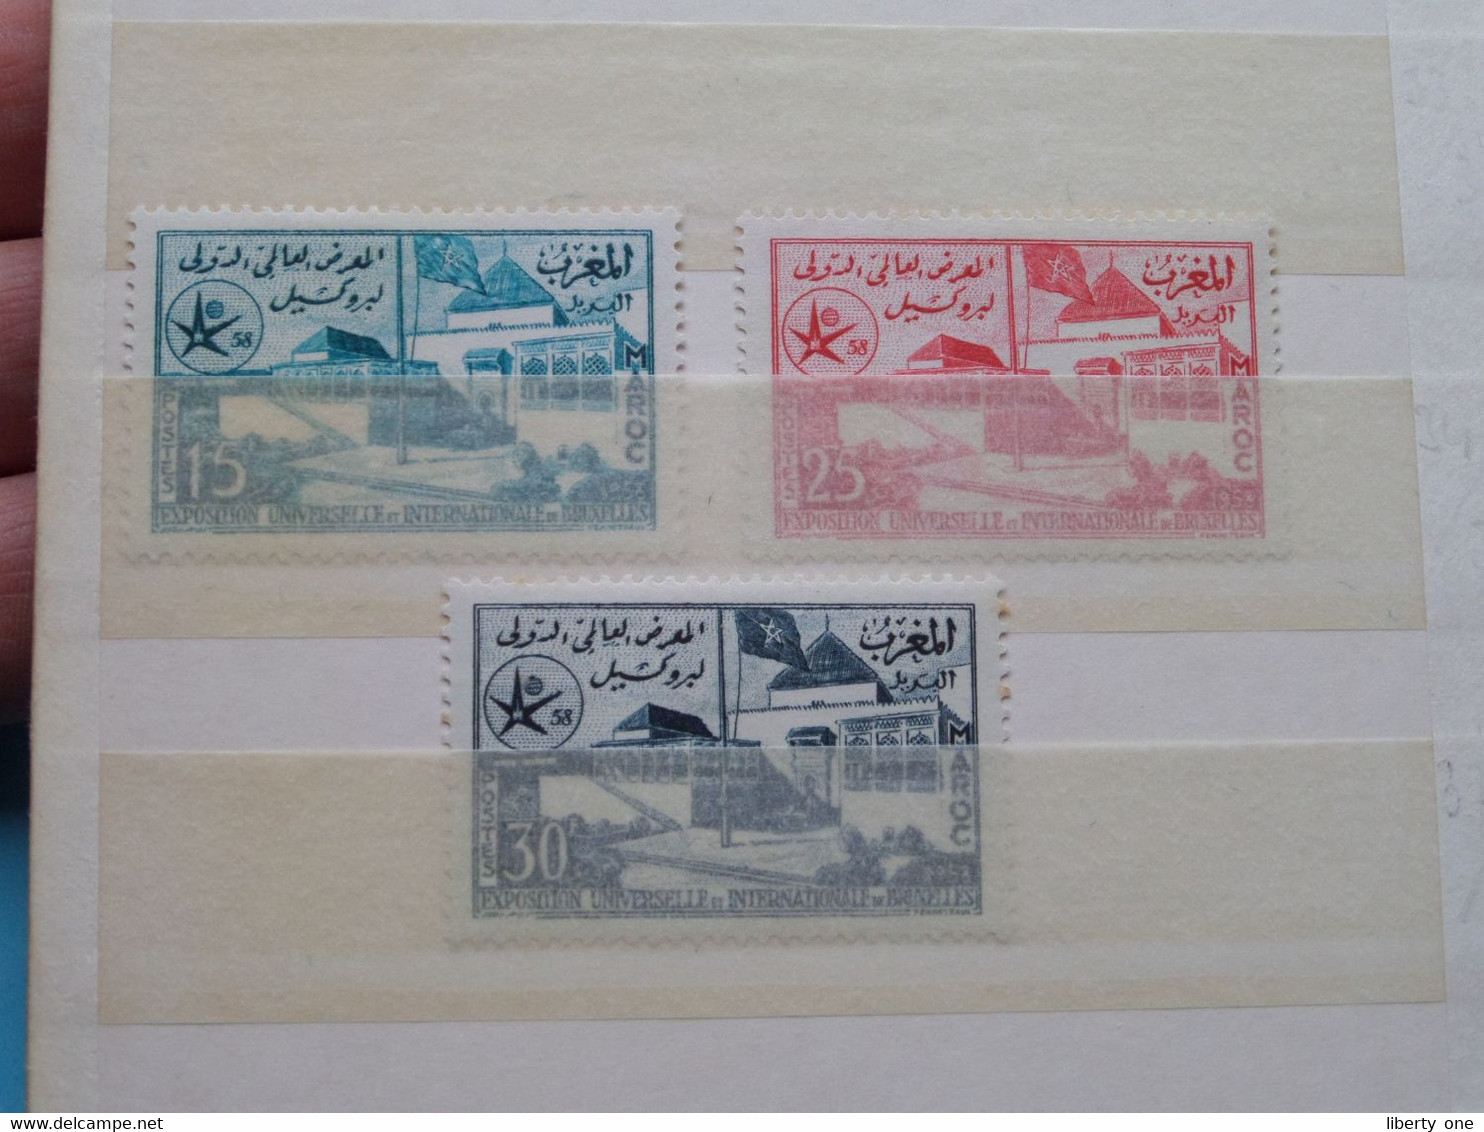 EXPOSITION De BRUXELLES >>> 3 Timbres / Stamps MAROC / Expo Mundial > 1958 Brussels ) See Photo ! - 1958 – Bruxelles (Belgique)